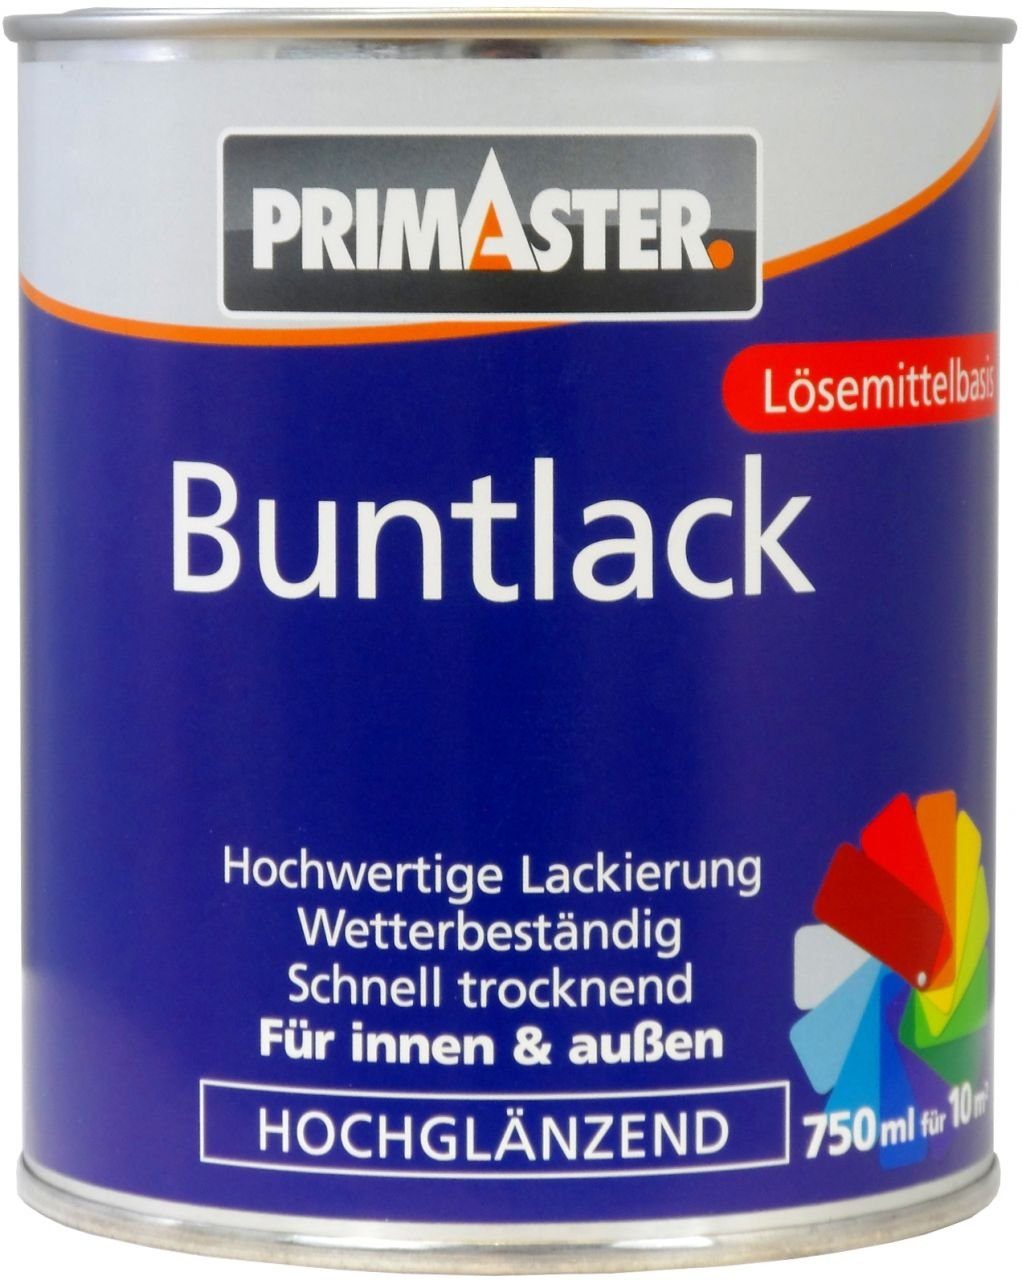 RAL Primaster Acryl-Buntlack weiß 750 ml Primaster 9010 Buntlack